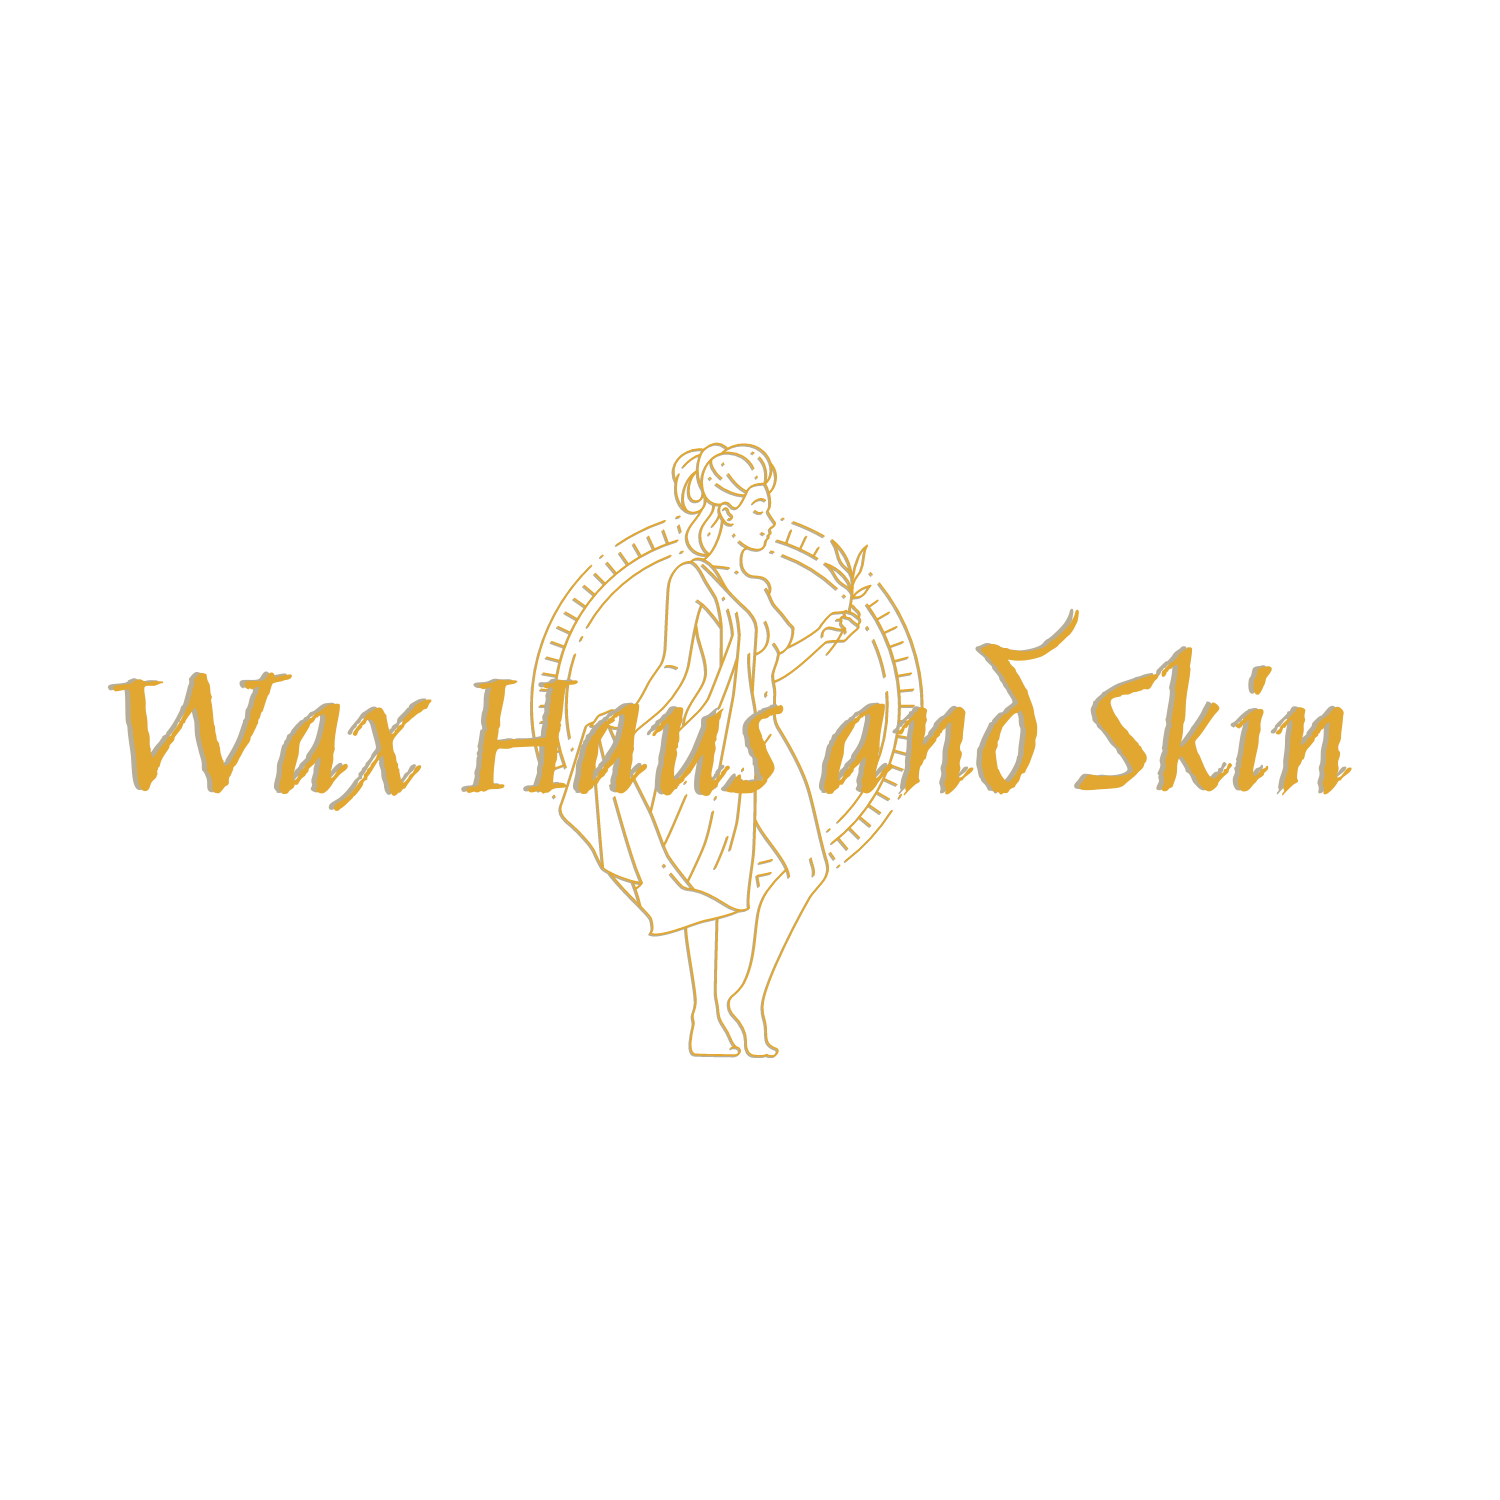 Wax Haus and Skin